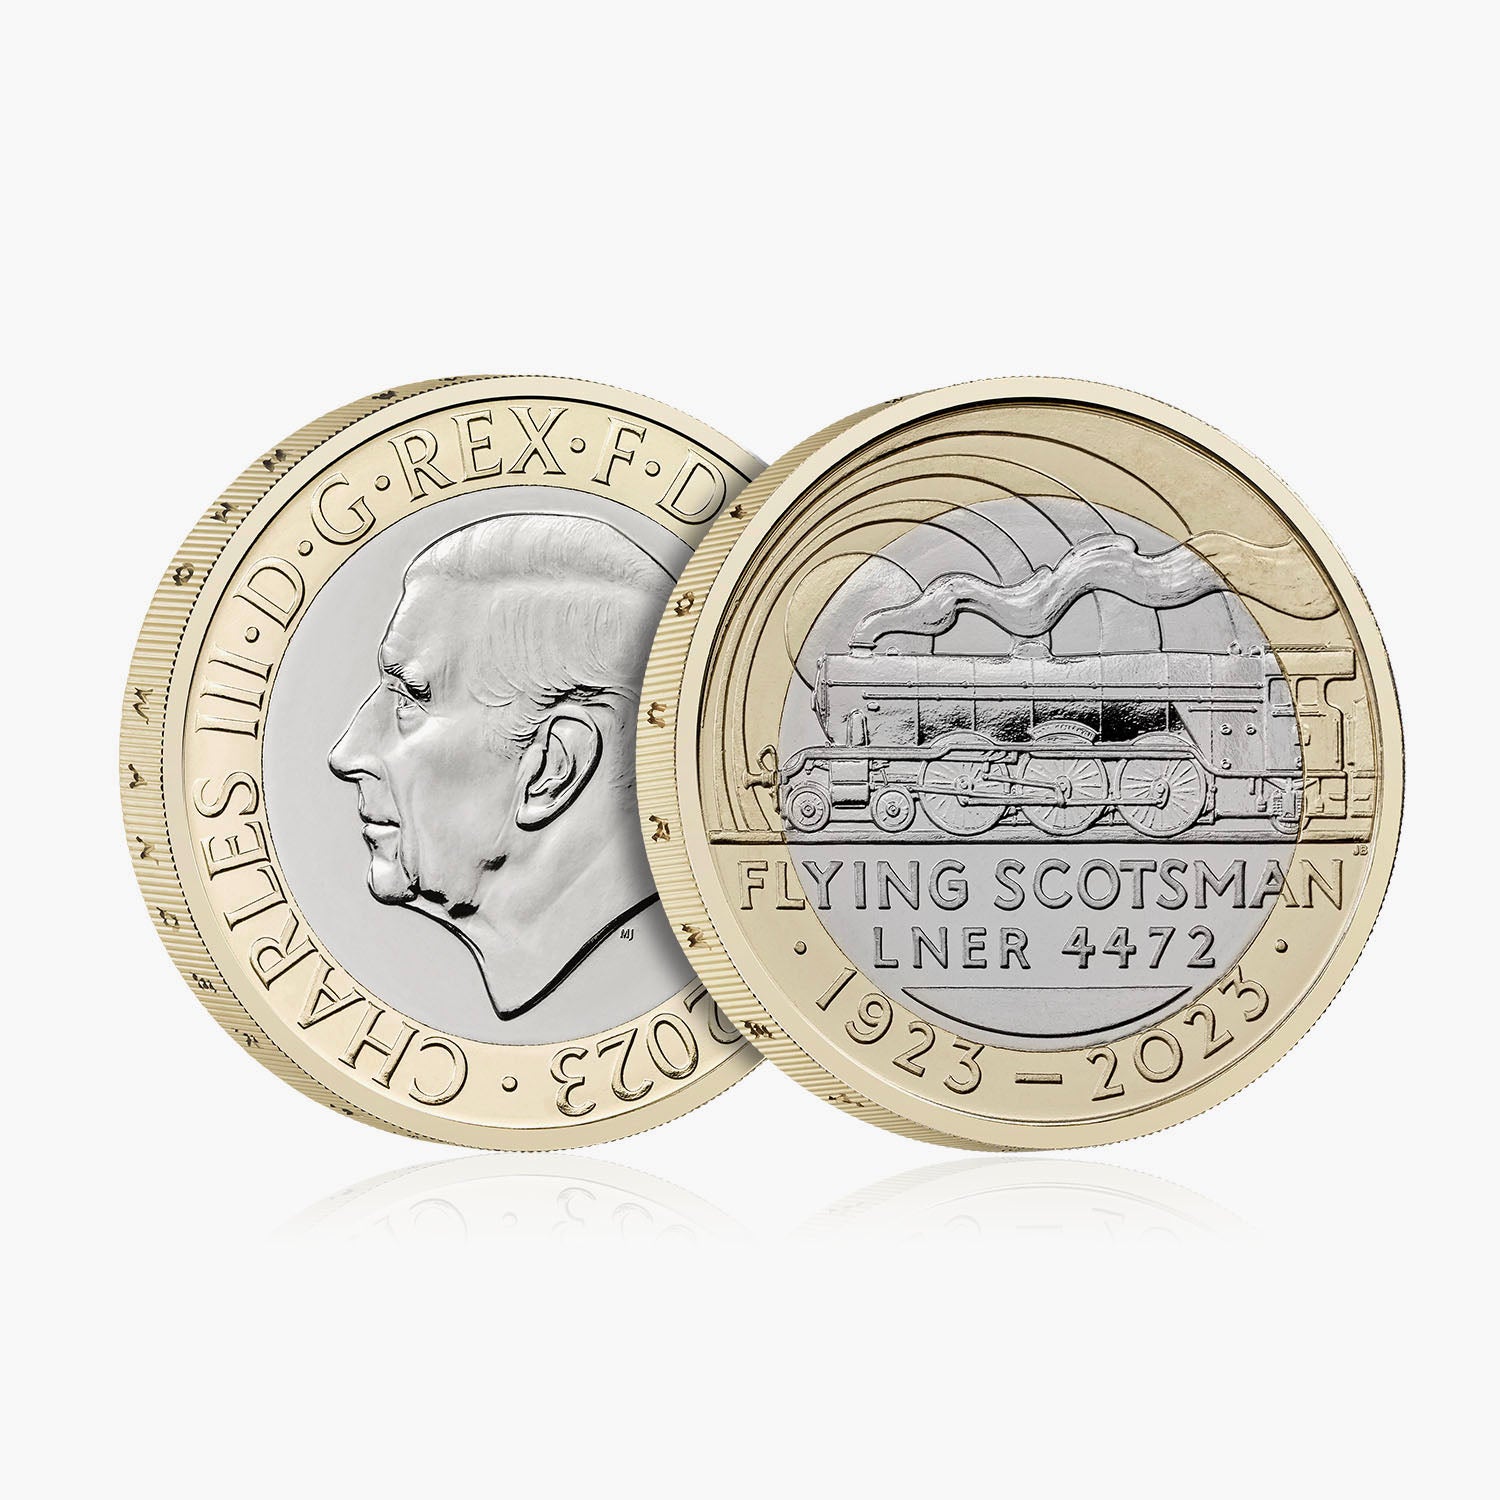 The 2023 United Kingdom Brilliant Uncirculated Annual Coin Set